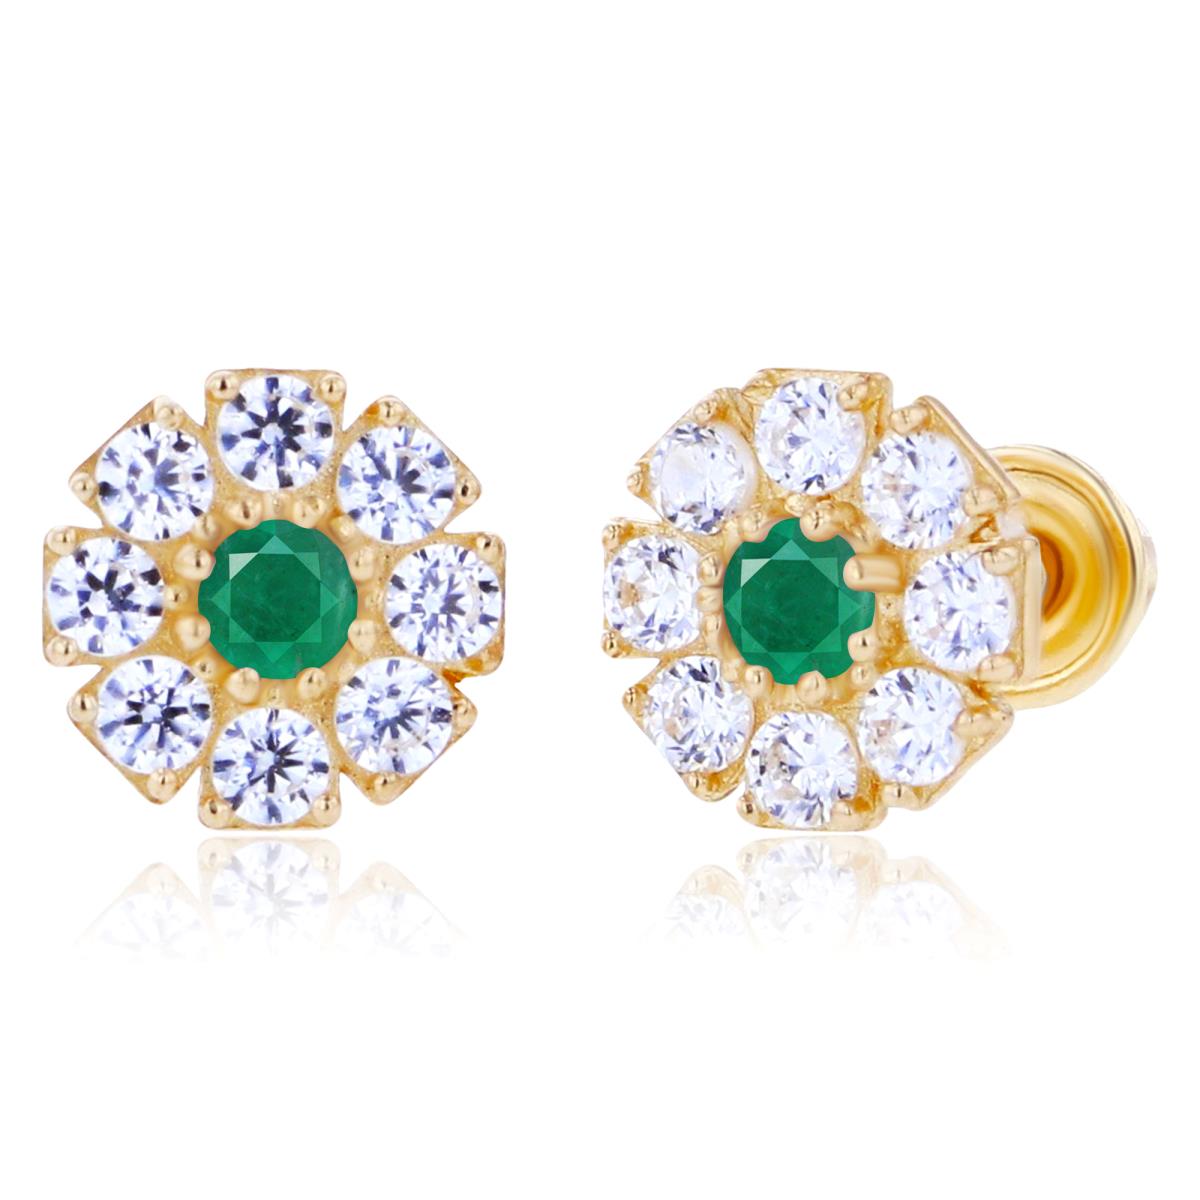 14K Yellow Gold 2mm Round Emerald & 1.5mm Created White Sapphire Flower Screwback Earrings